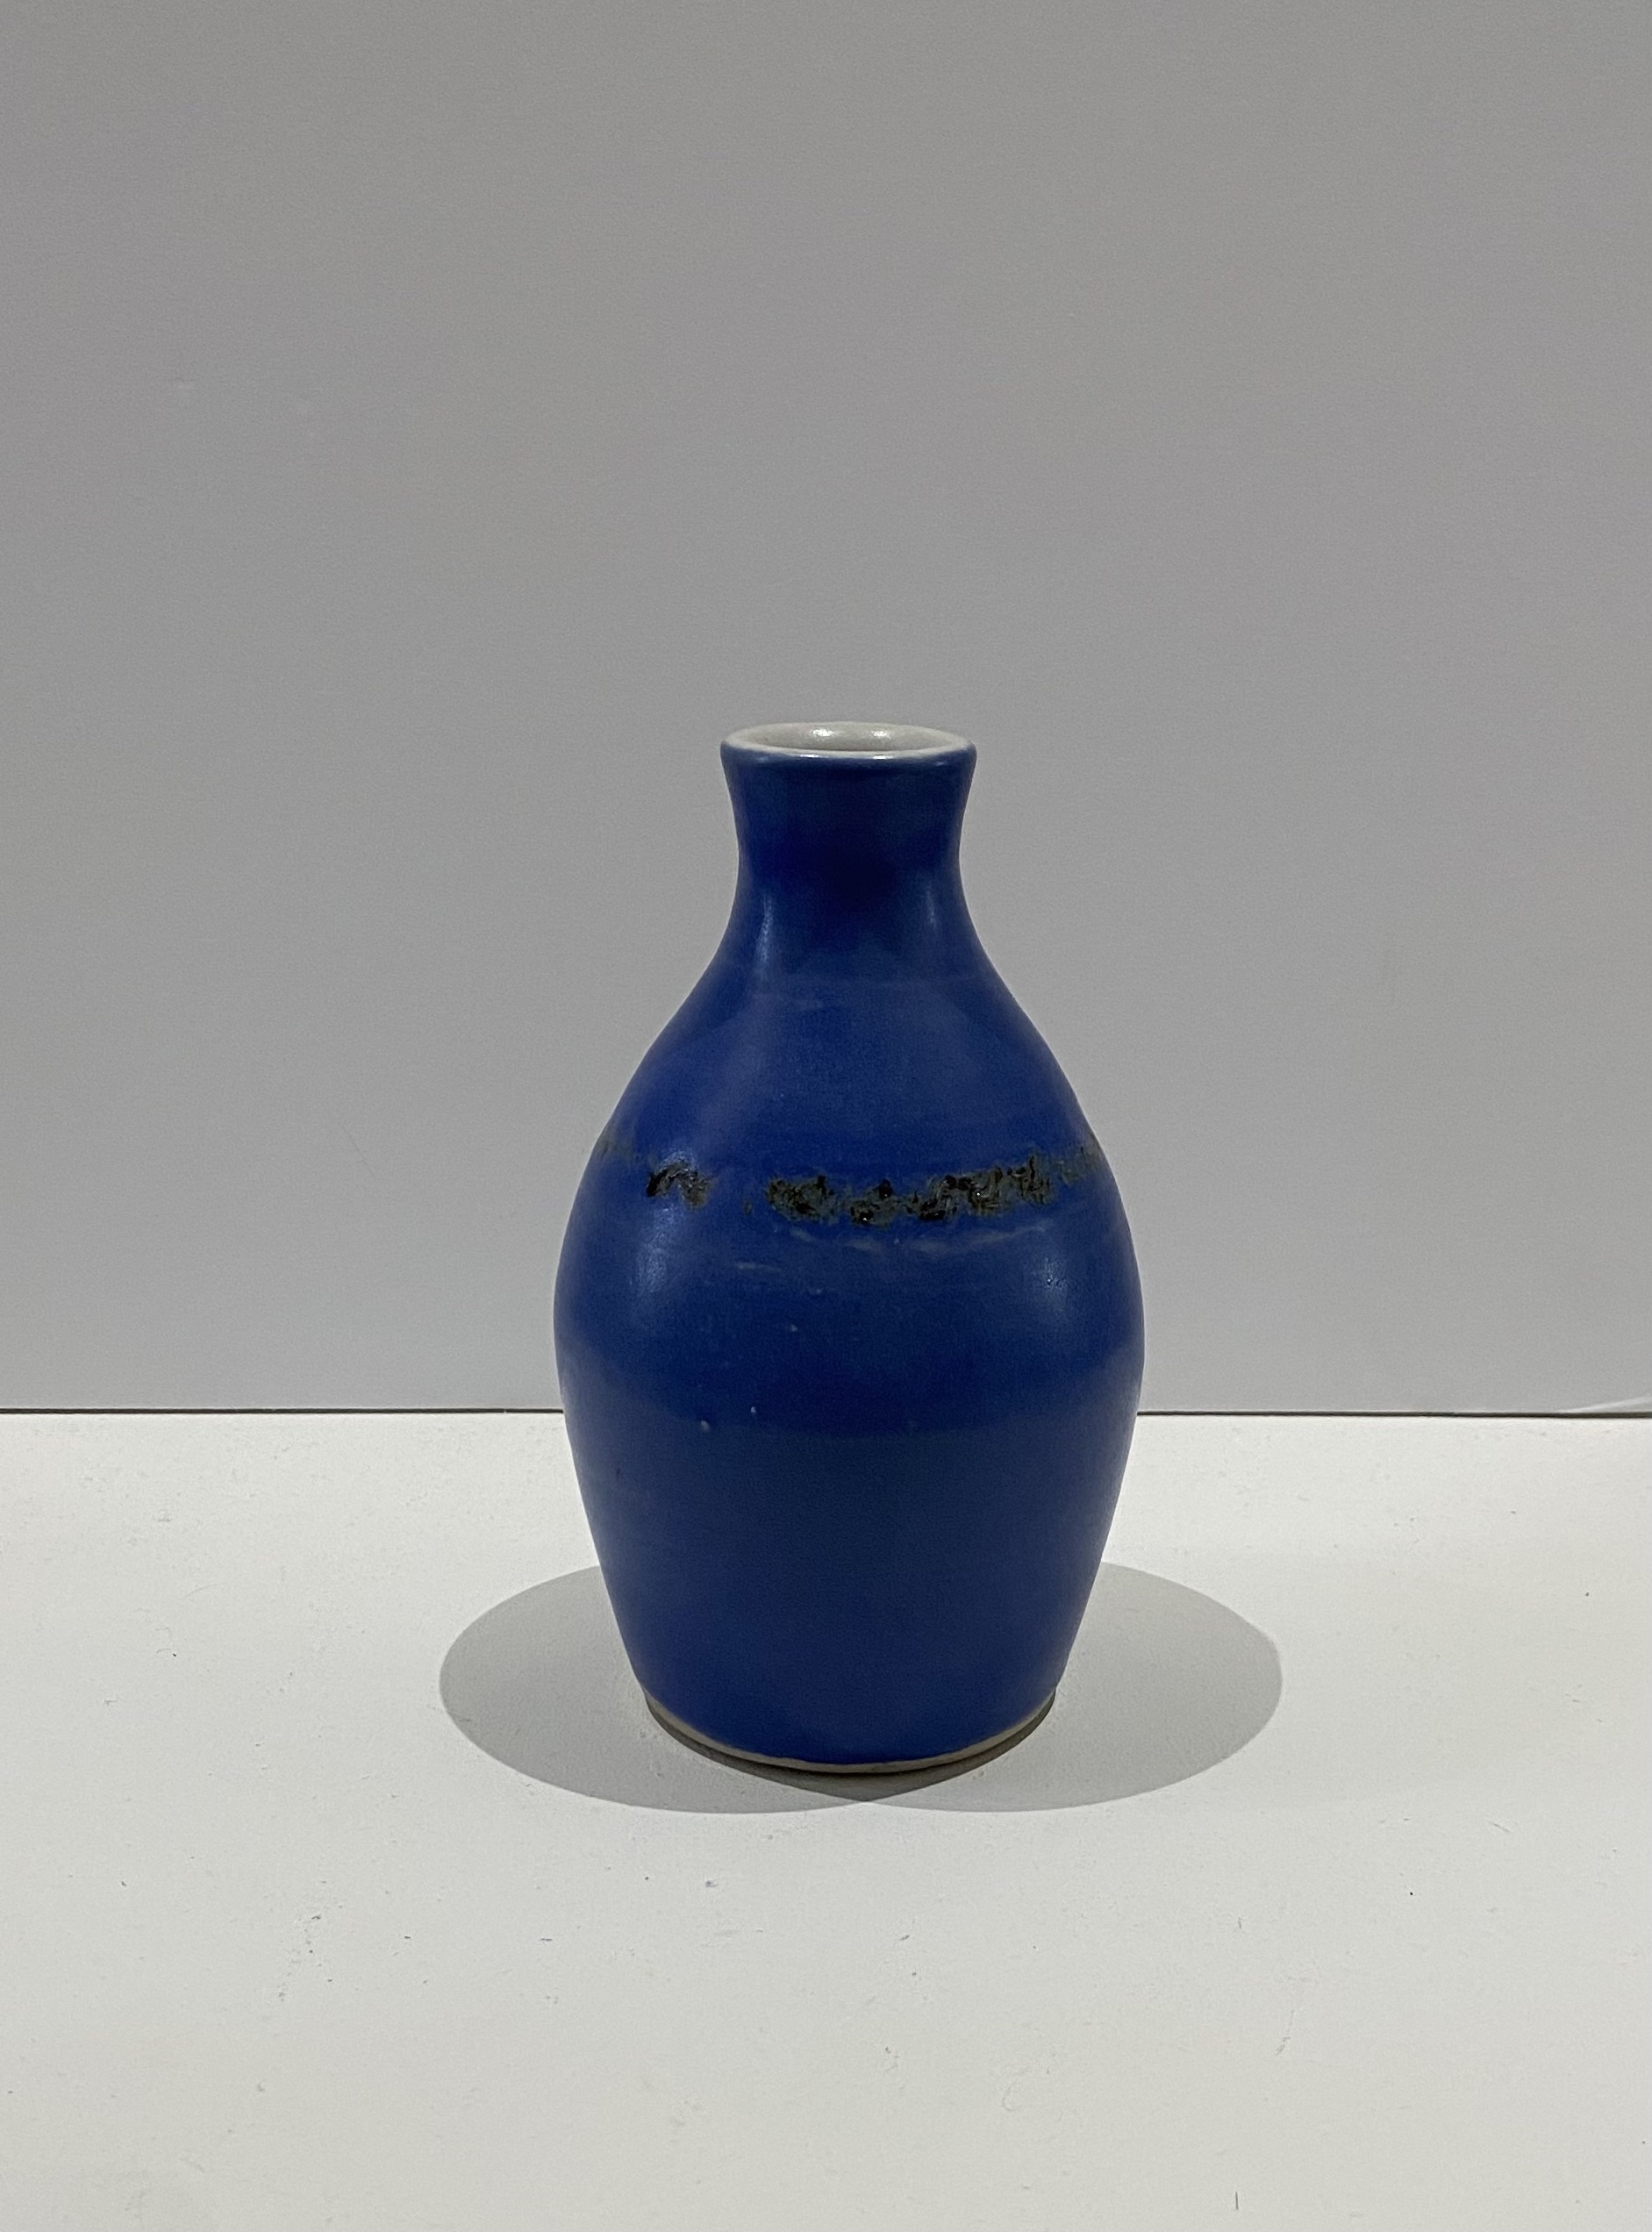 Vase
gas-fired ceramic
6"
$35.